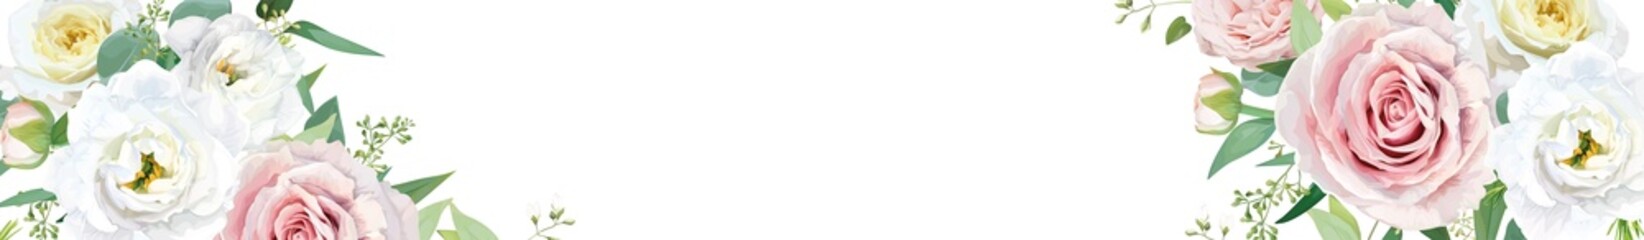 Vector art floral wedding site banner design with pink, white and yellow flowers. Garden roses, seeded eucalyptus, lisanthus, ranunculus flower. Editable frame, border illustration on white background